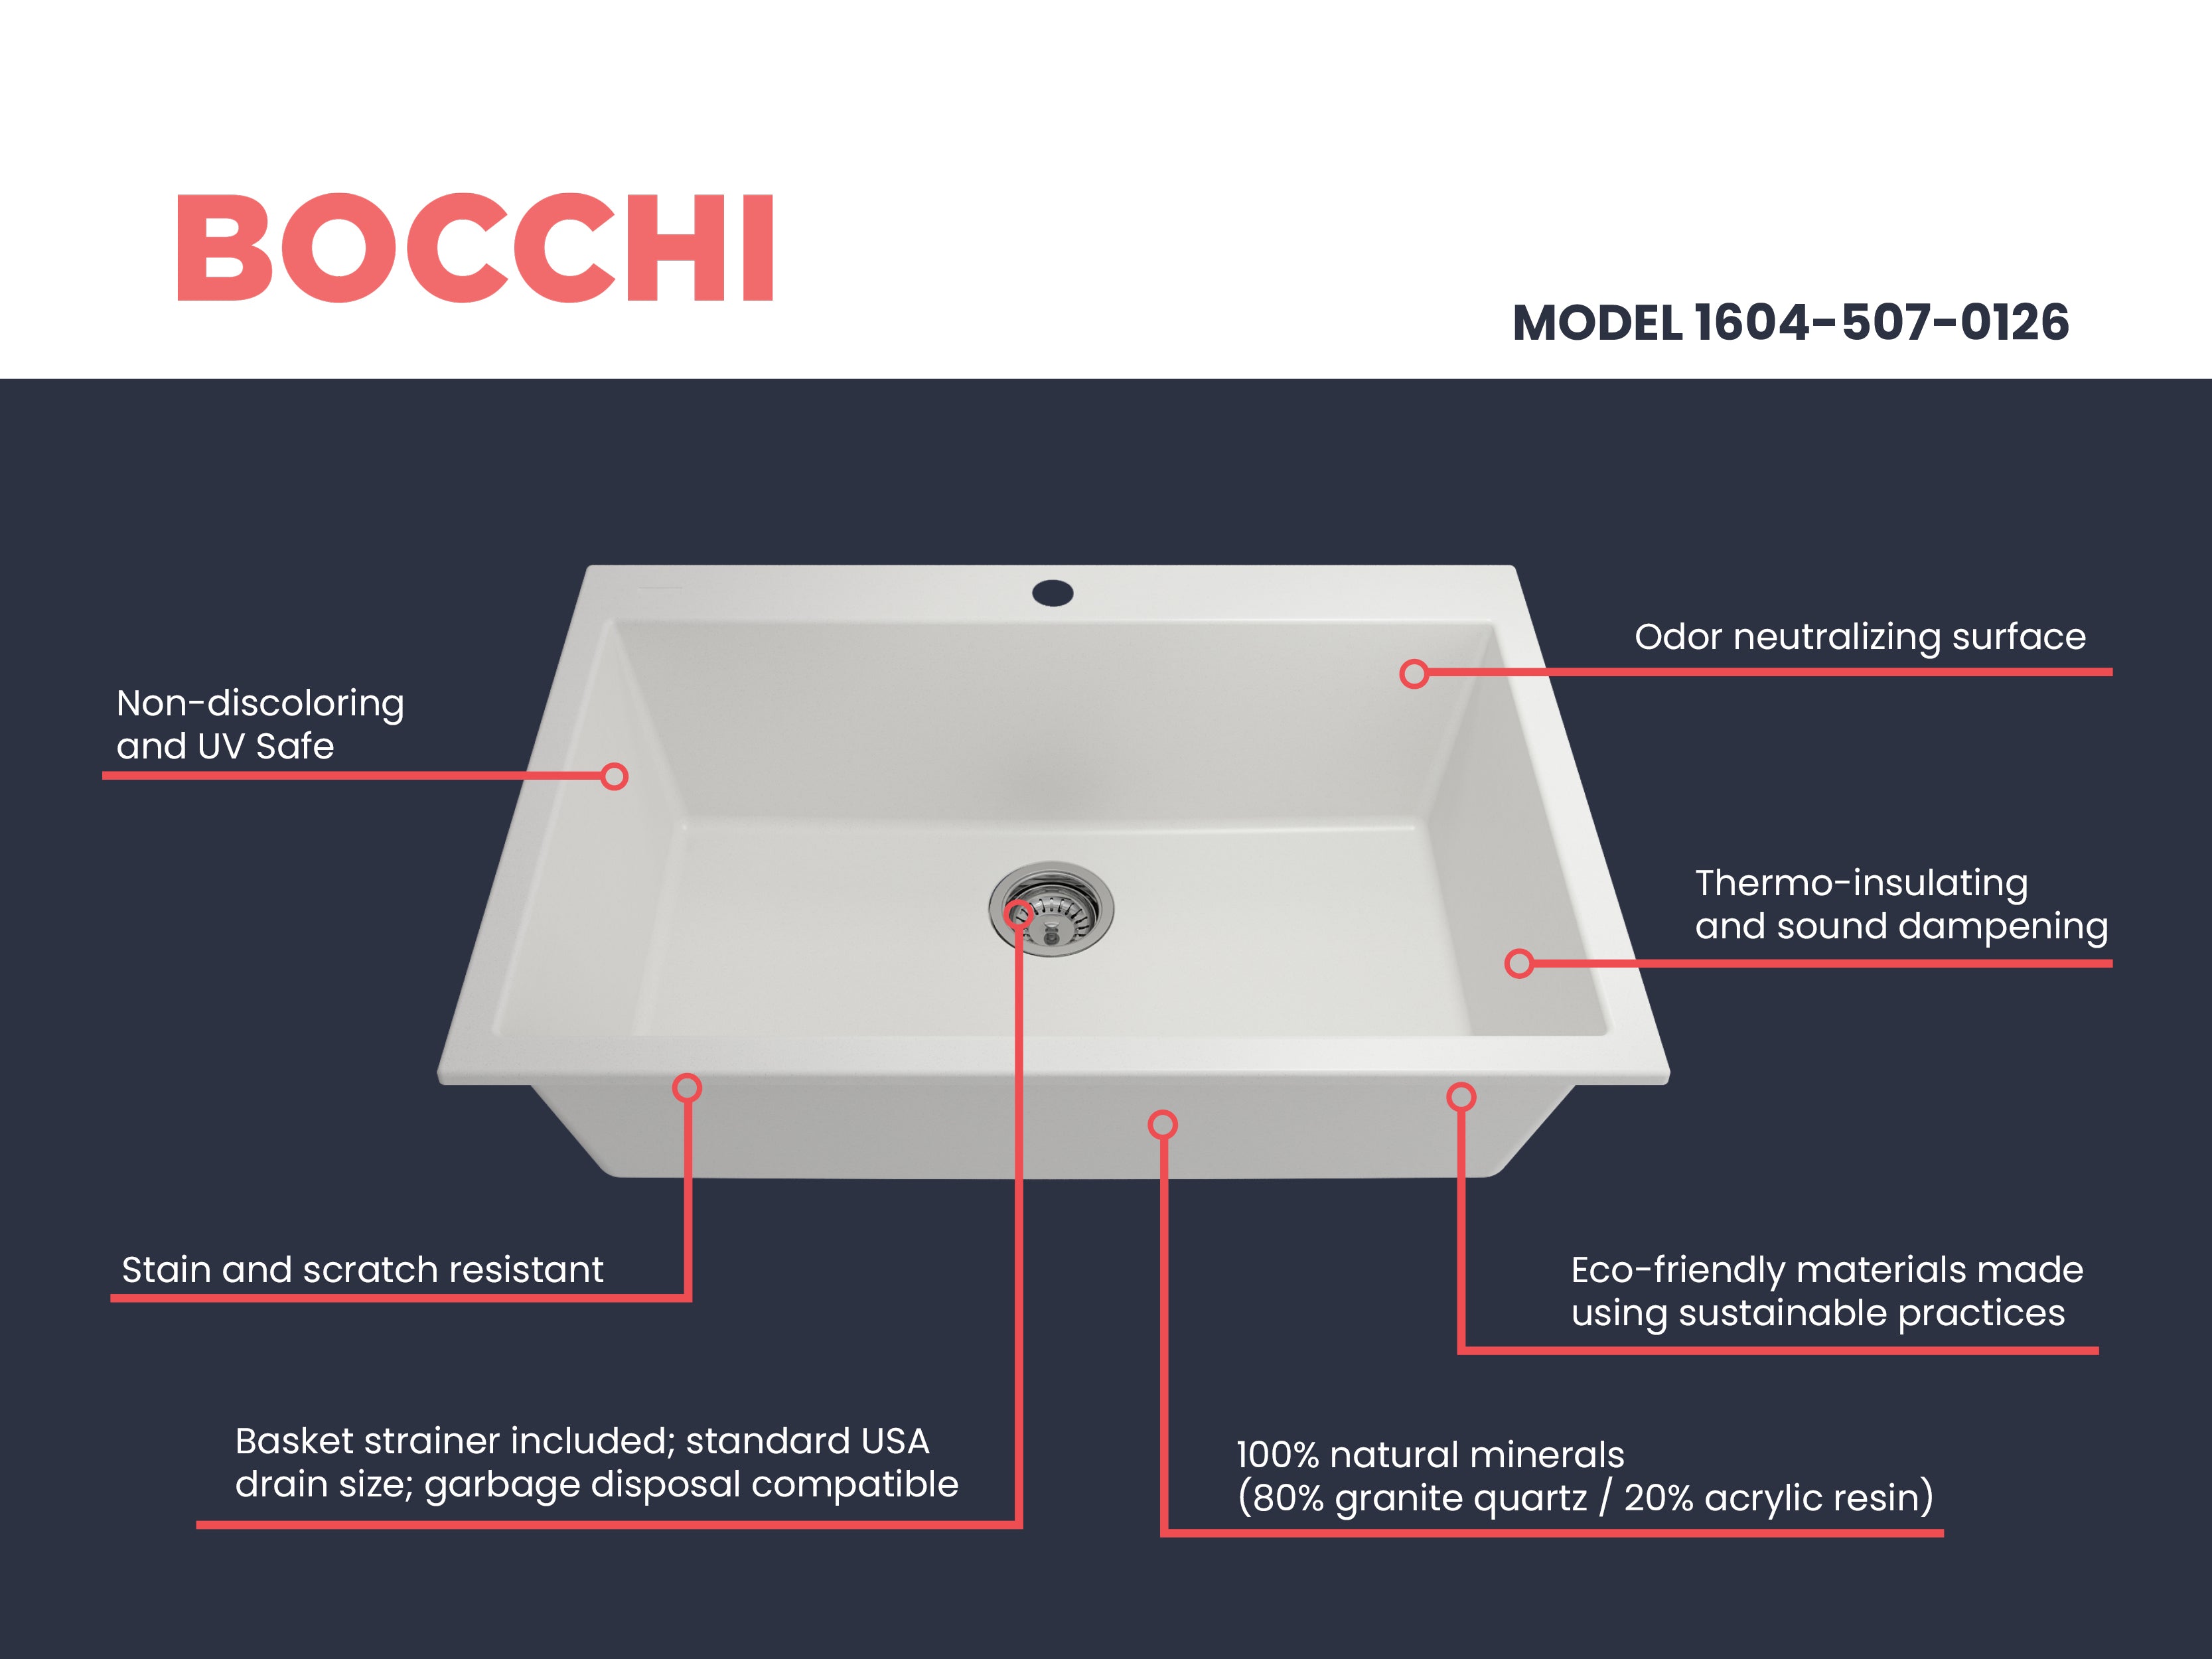 Bocchi Milk White Composite 33" Single Bowl Kitchen Sink